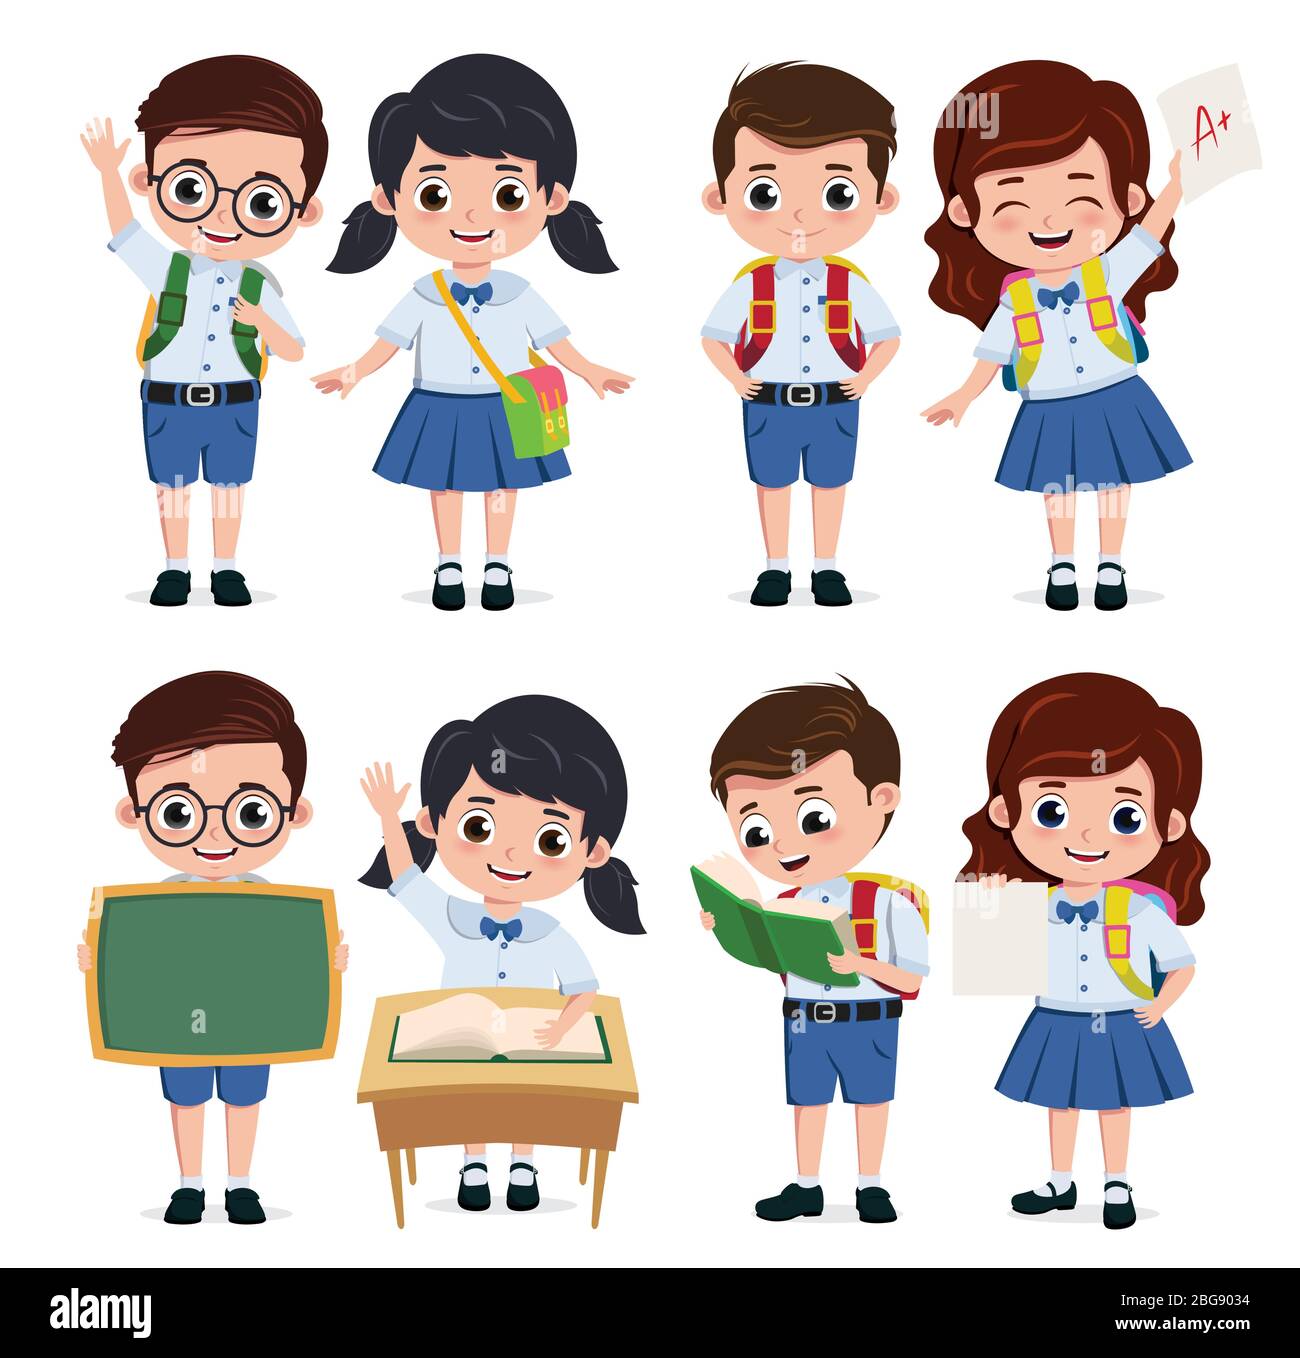 Schule Klassenkameraden Schüler Charakter Vektor-Set. Zurück zur Schule Klassenkameraden Kinder Grundschulfiguren tragen Uniform tun pädagogische Aktivitäten. Stock Vektor